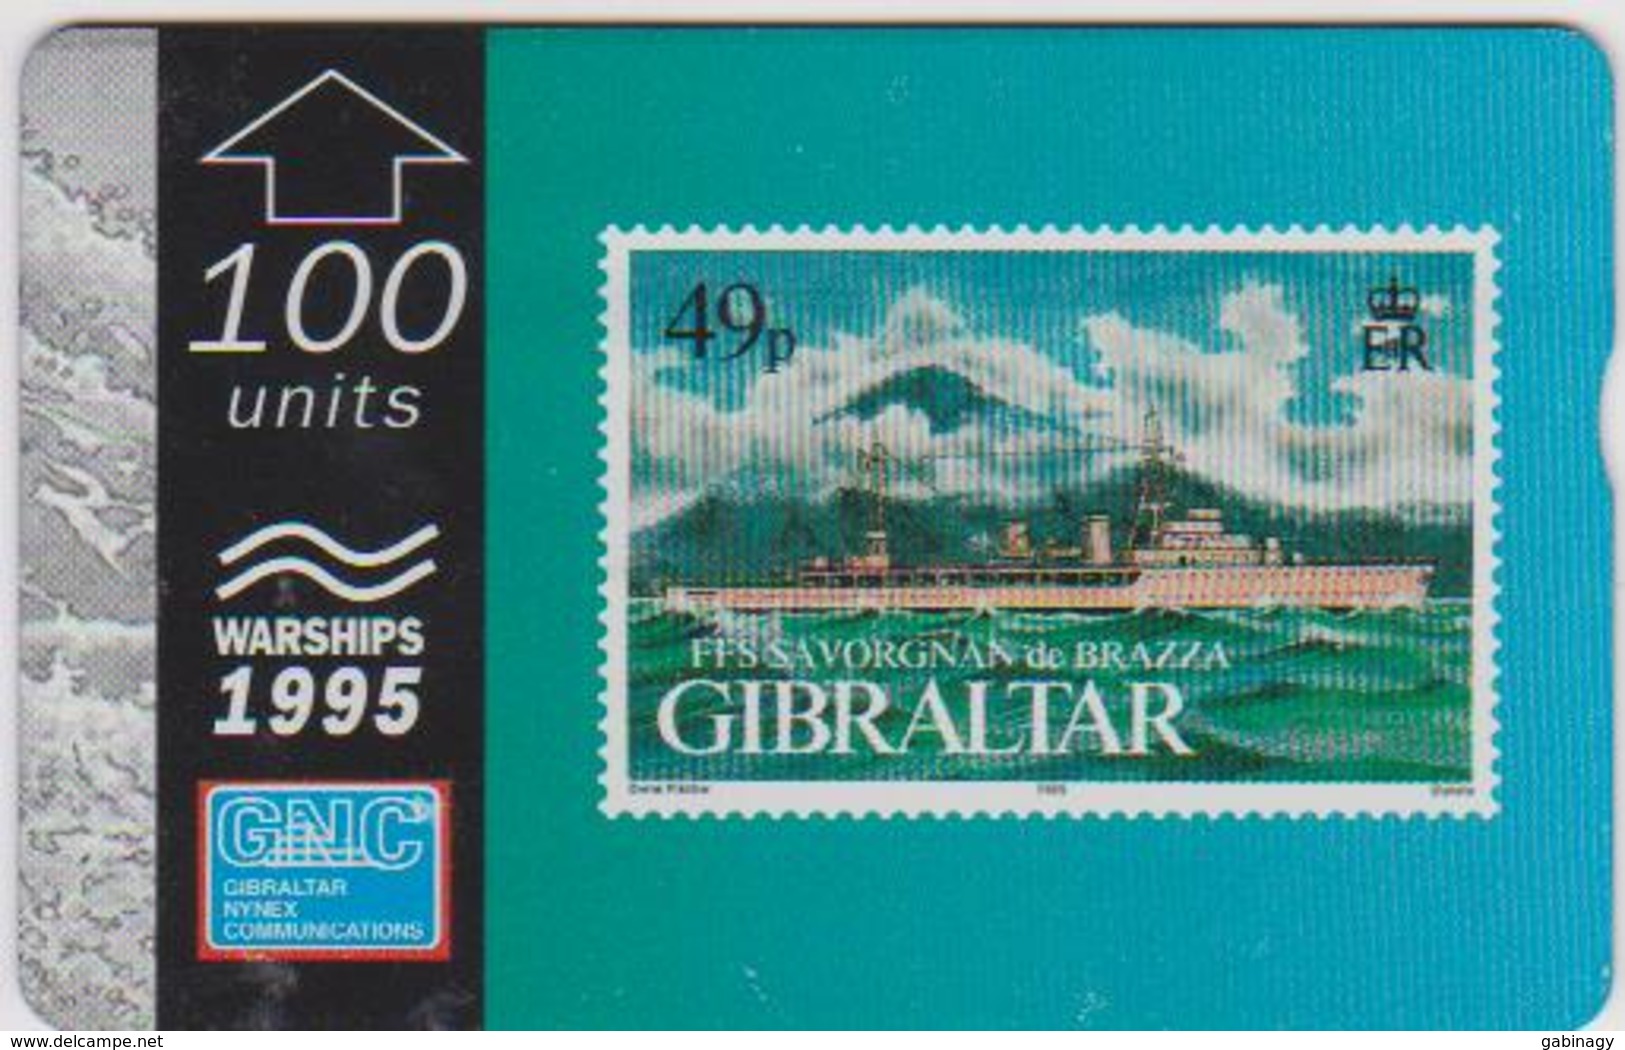 GIBRALTAR - 49 - FSS SAVORGNAN DE BRAZZA - STAMP - 511L - Gibraltar